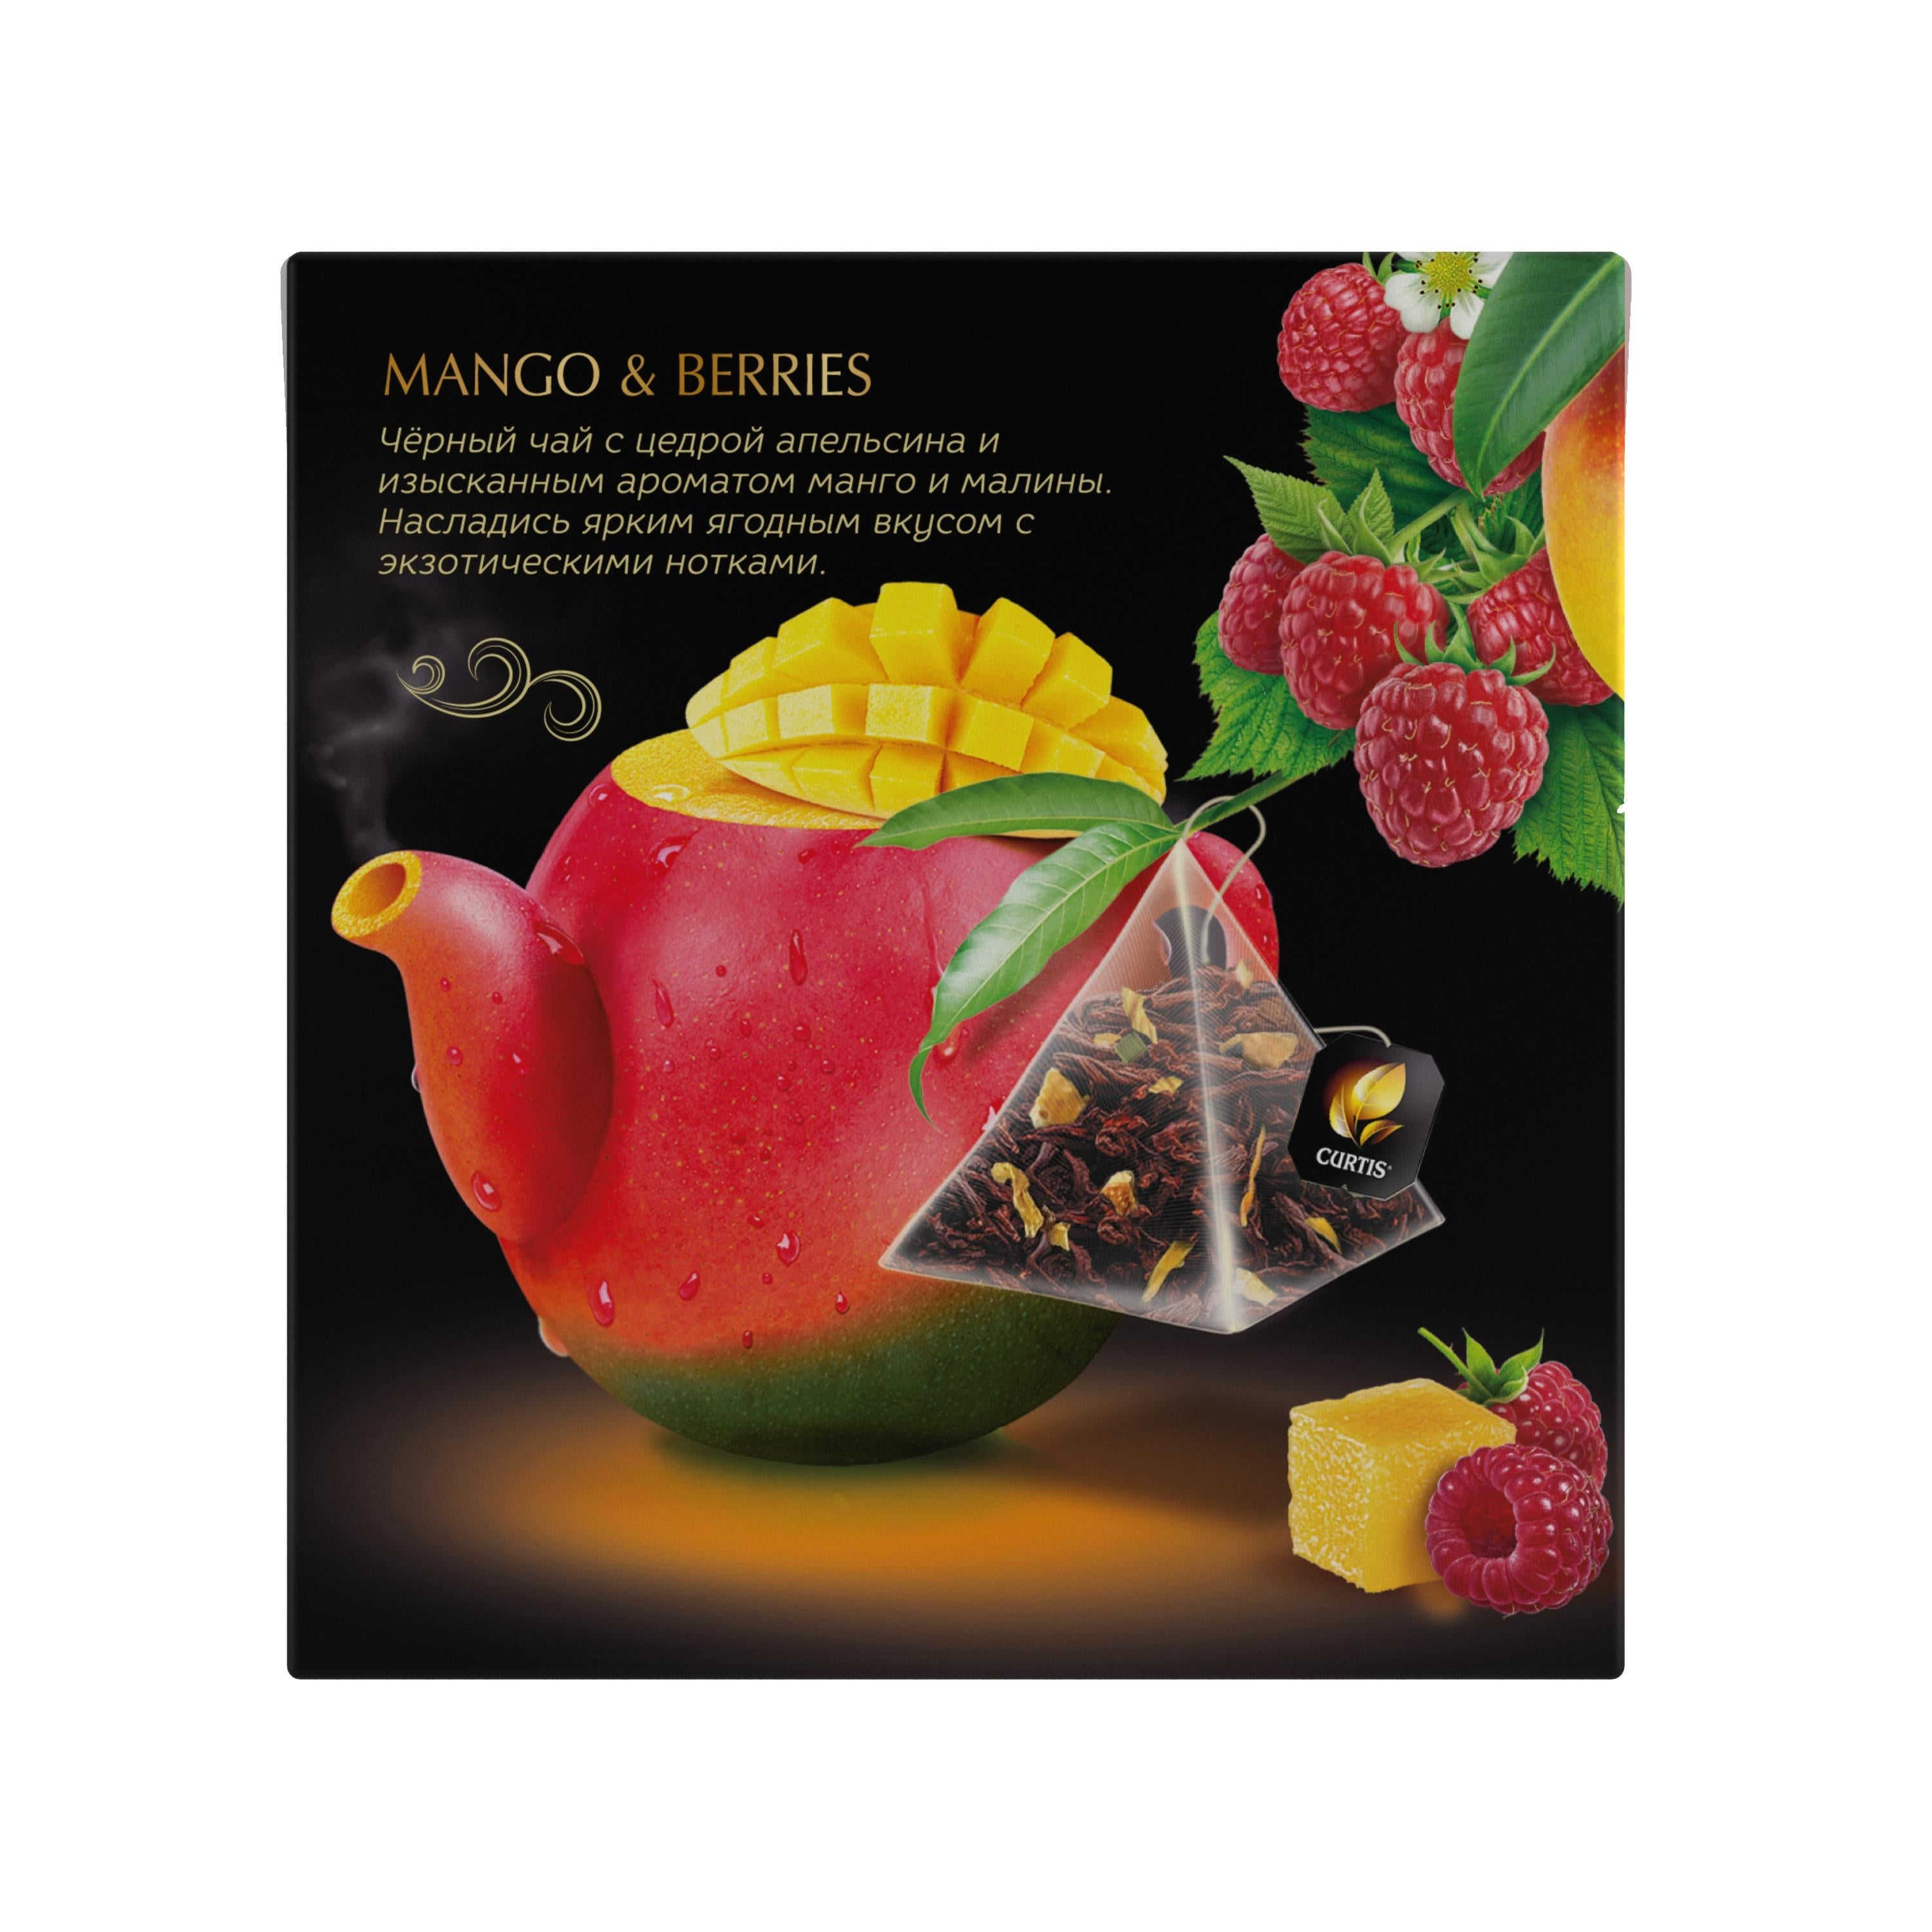 Mango & Berries, black flavored 20 pyramids (Pack of 4)